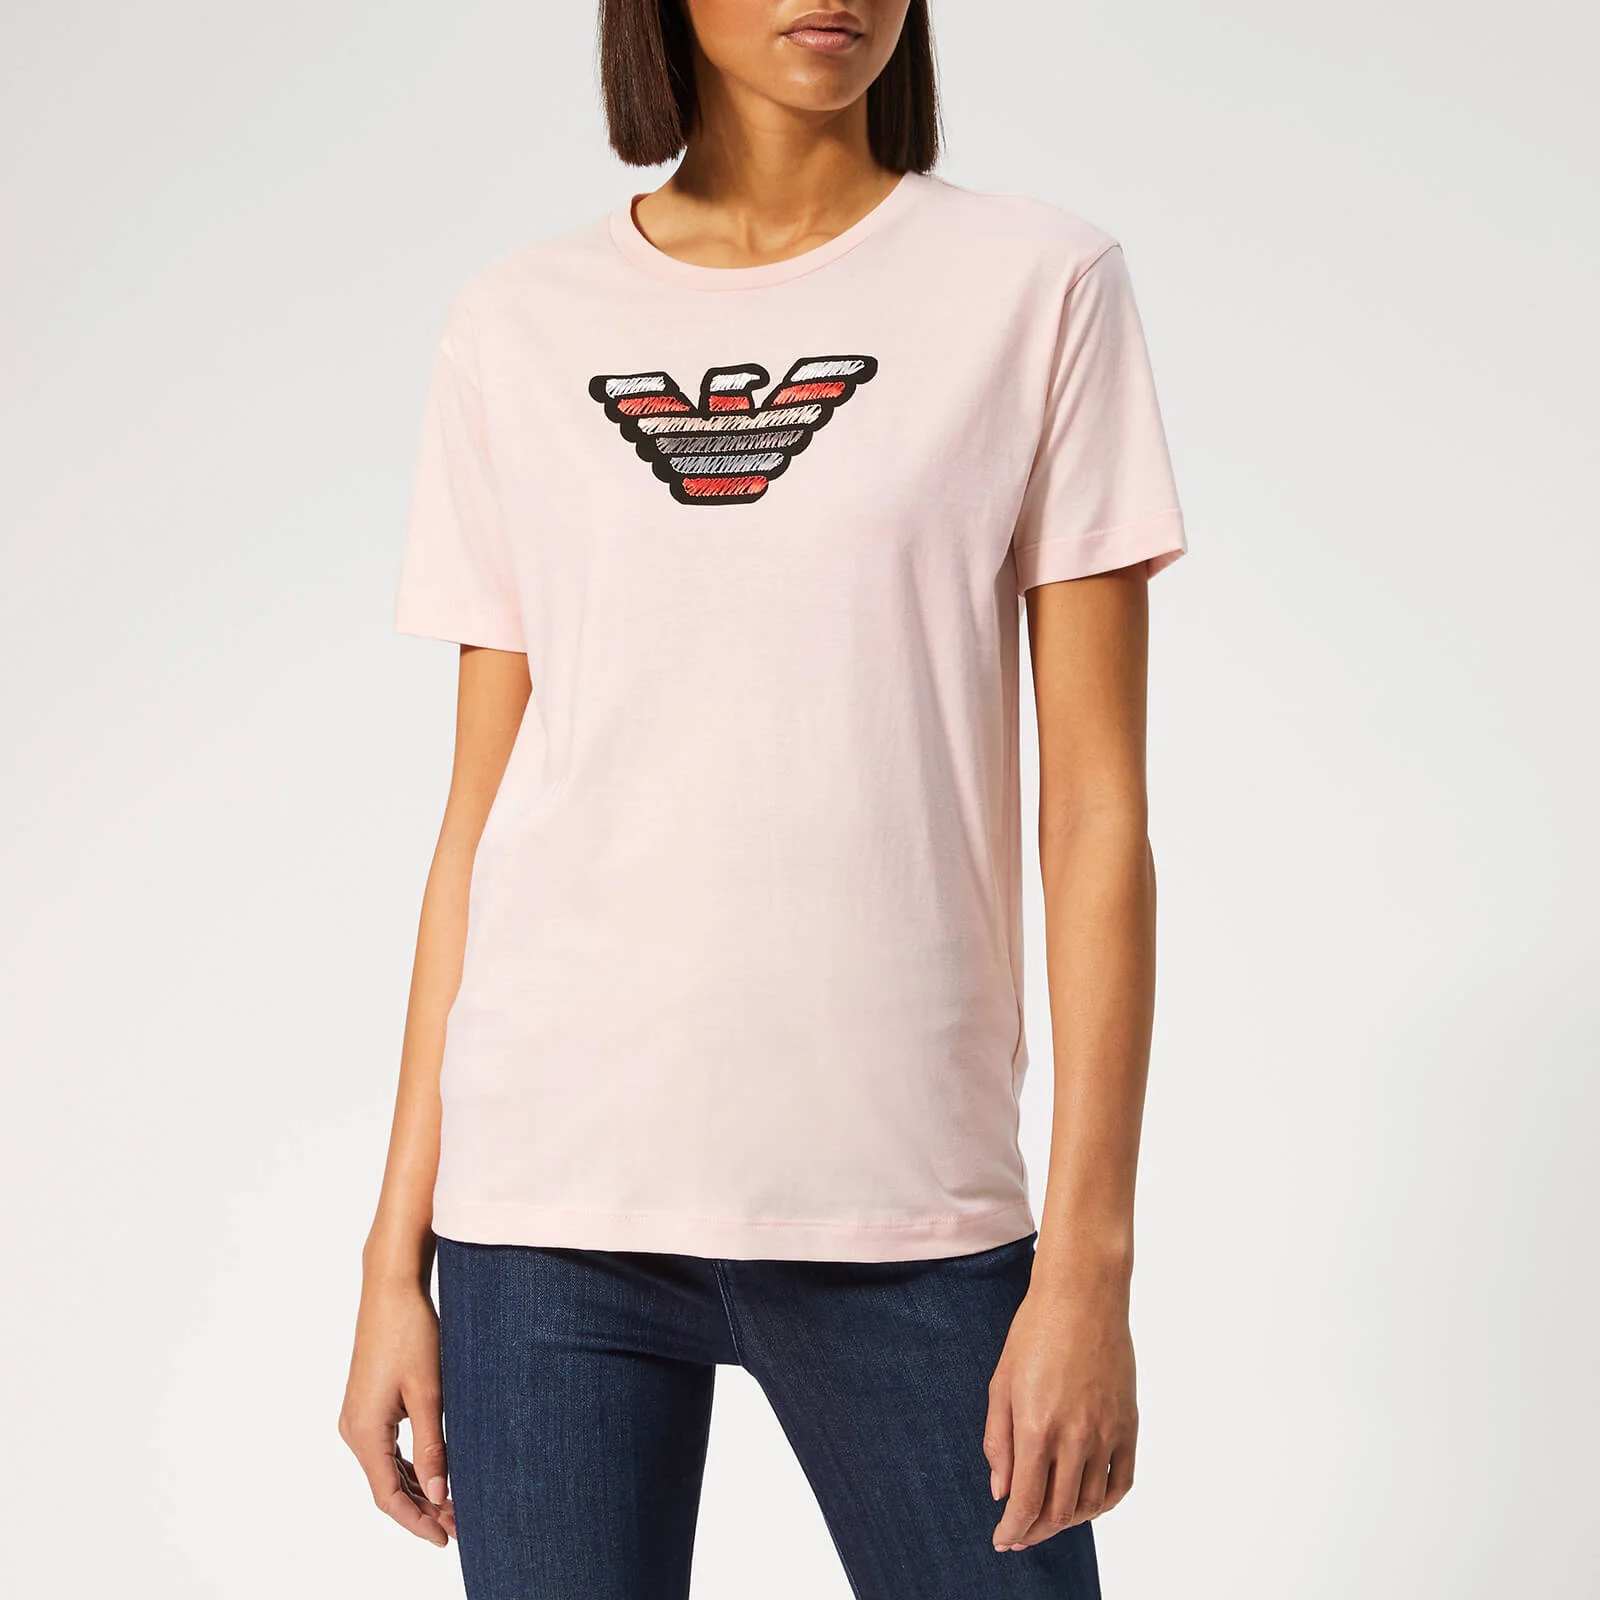 Emporio Armani Women's Multi Embroidered Logo T-Shirt - Pink Image 1